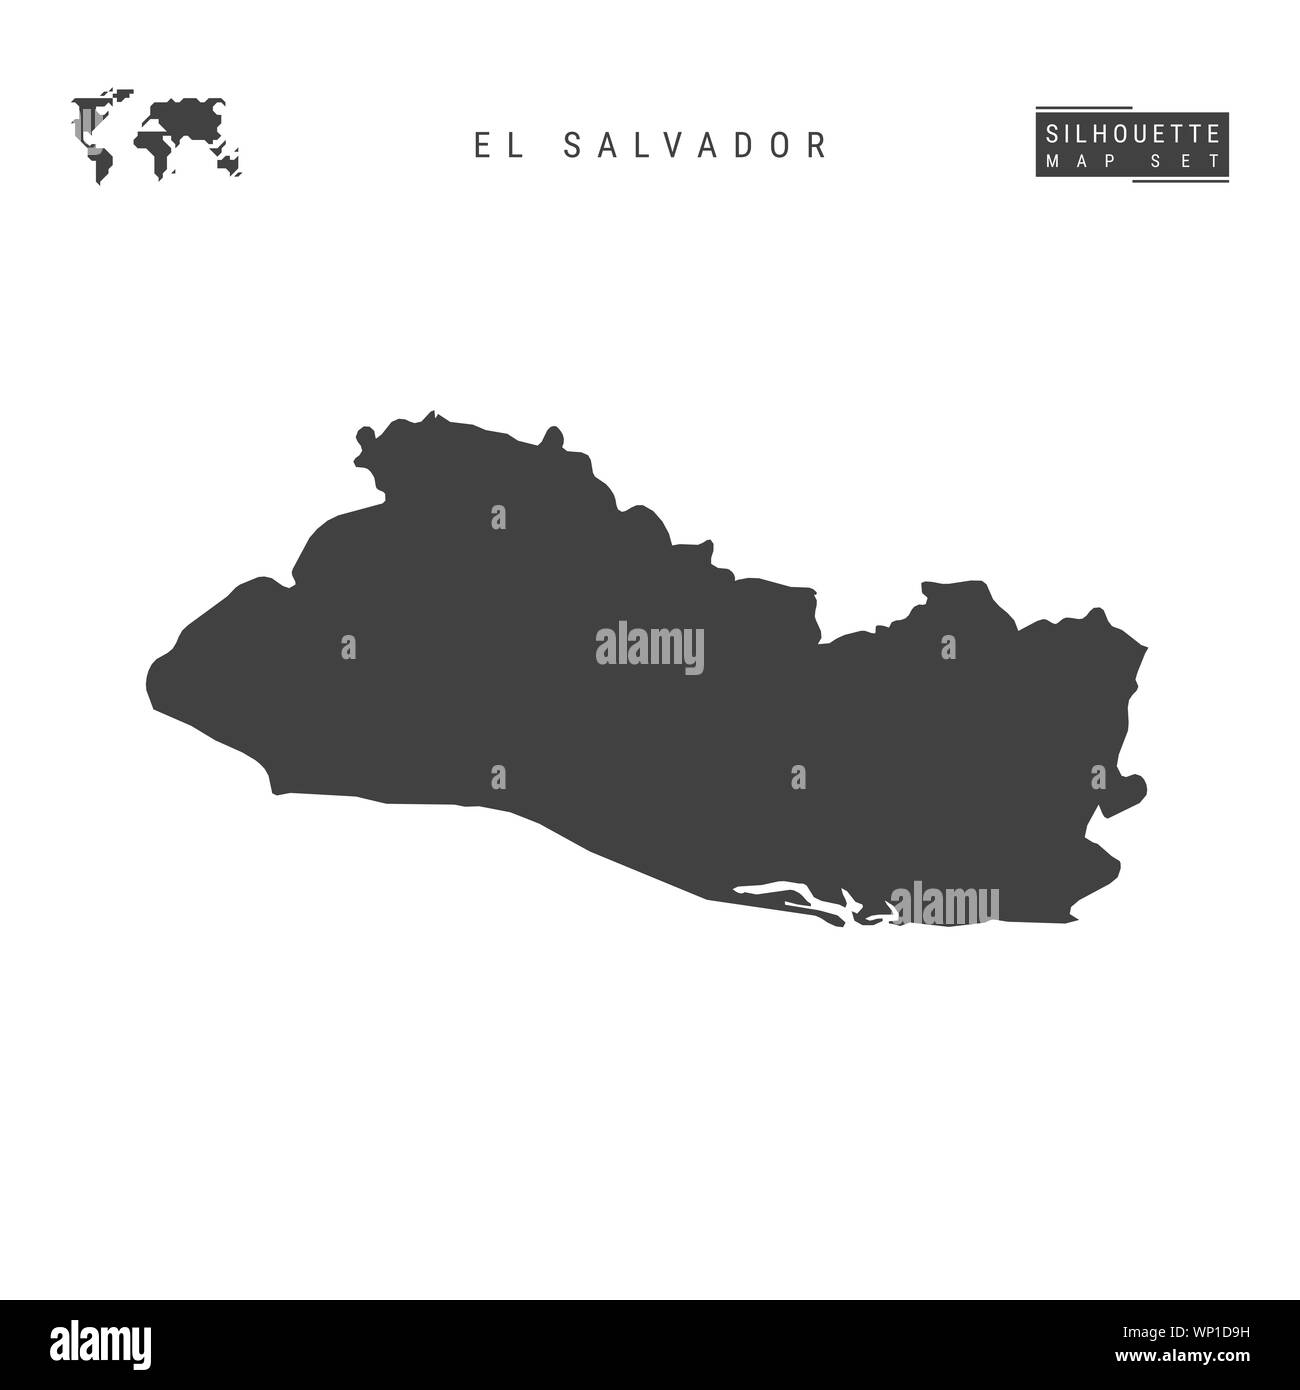 El Salvador Mappa vuota isolata su sfondo bianco. High-Detailed silhouette nera Mappa di El Salvador. Foto Stock